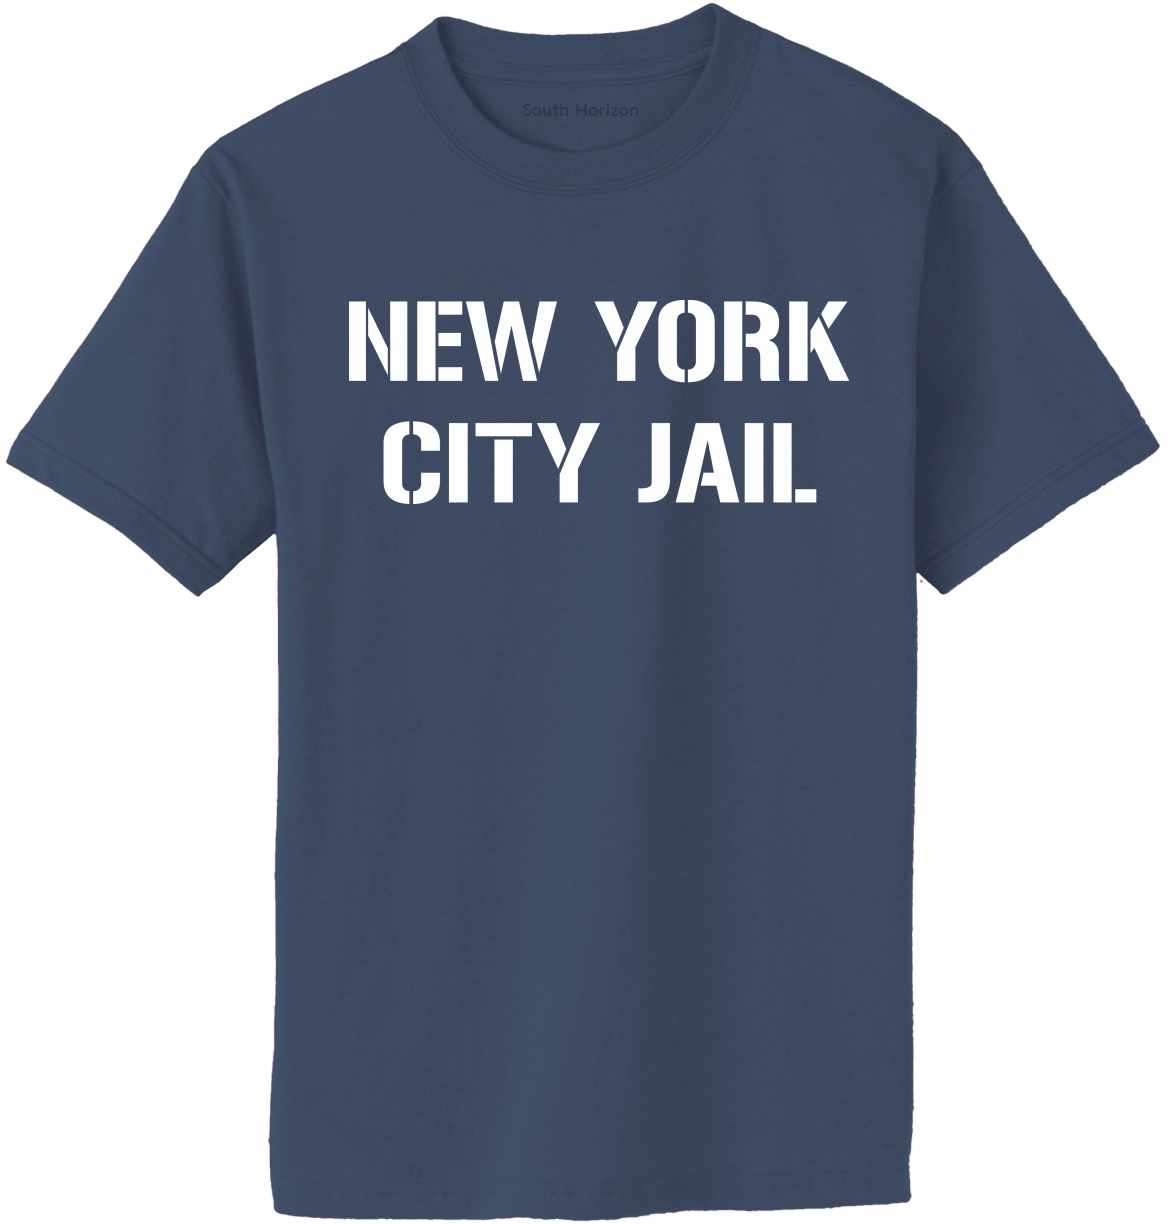 NEW YORK CITY JAIL Adult T-Shirt (#445-1)